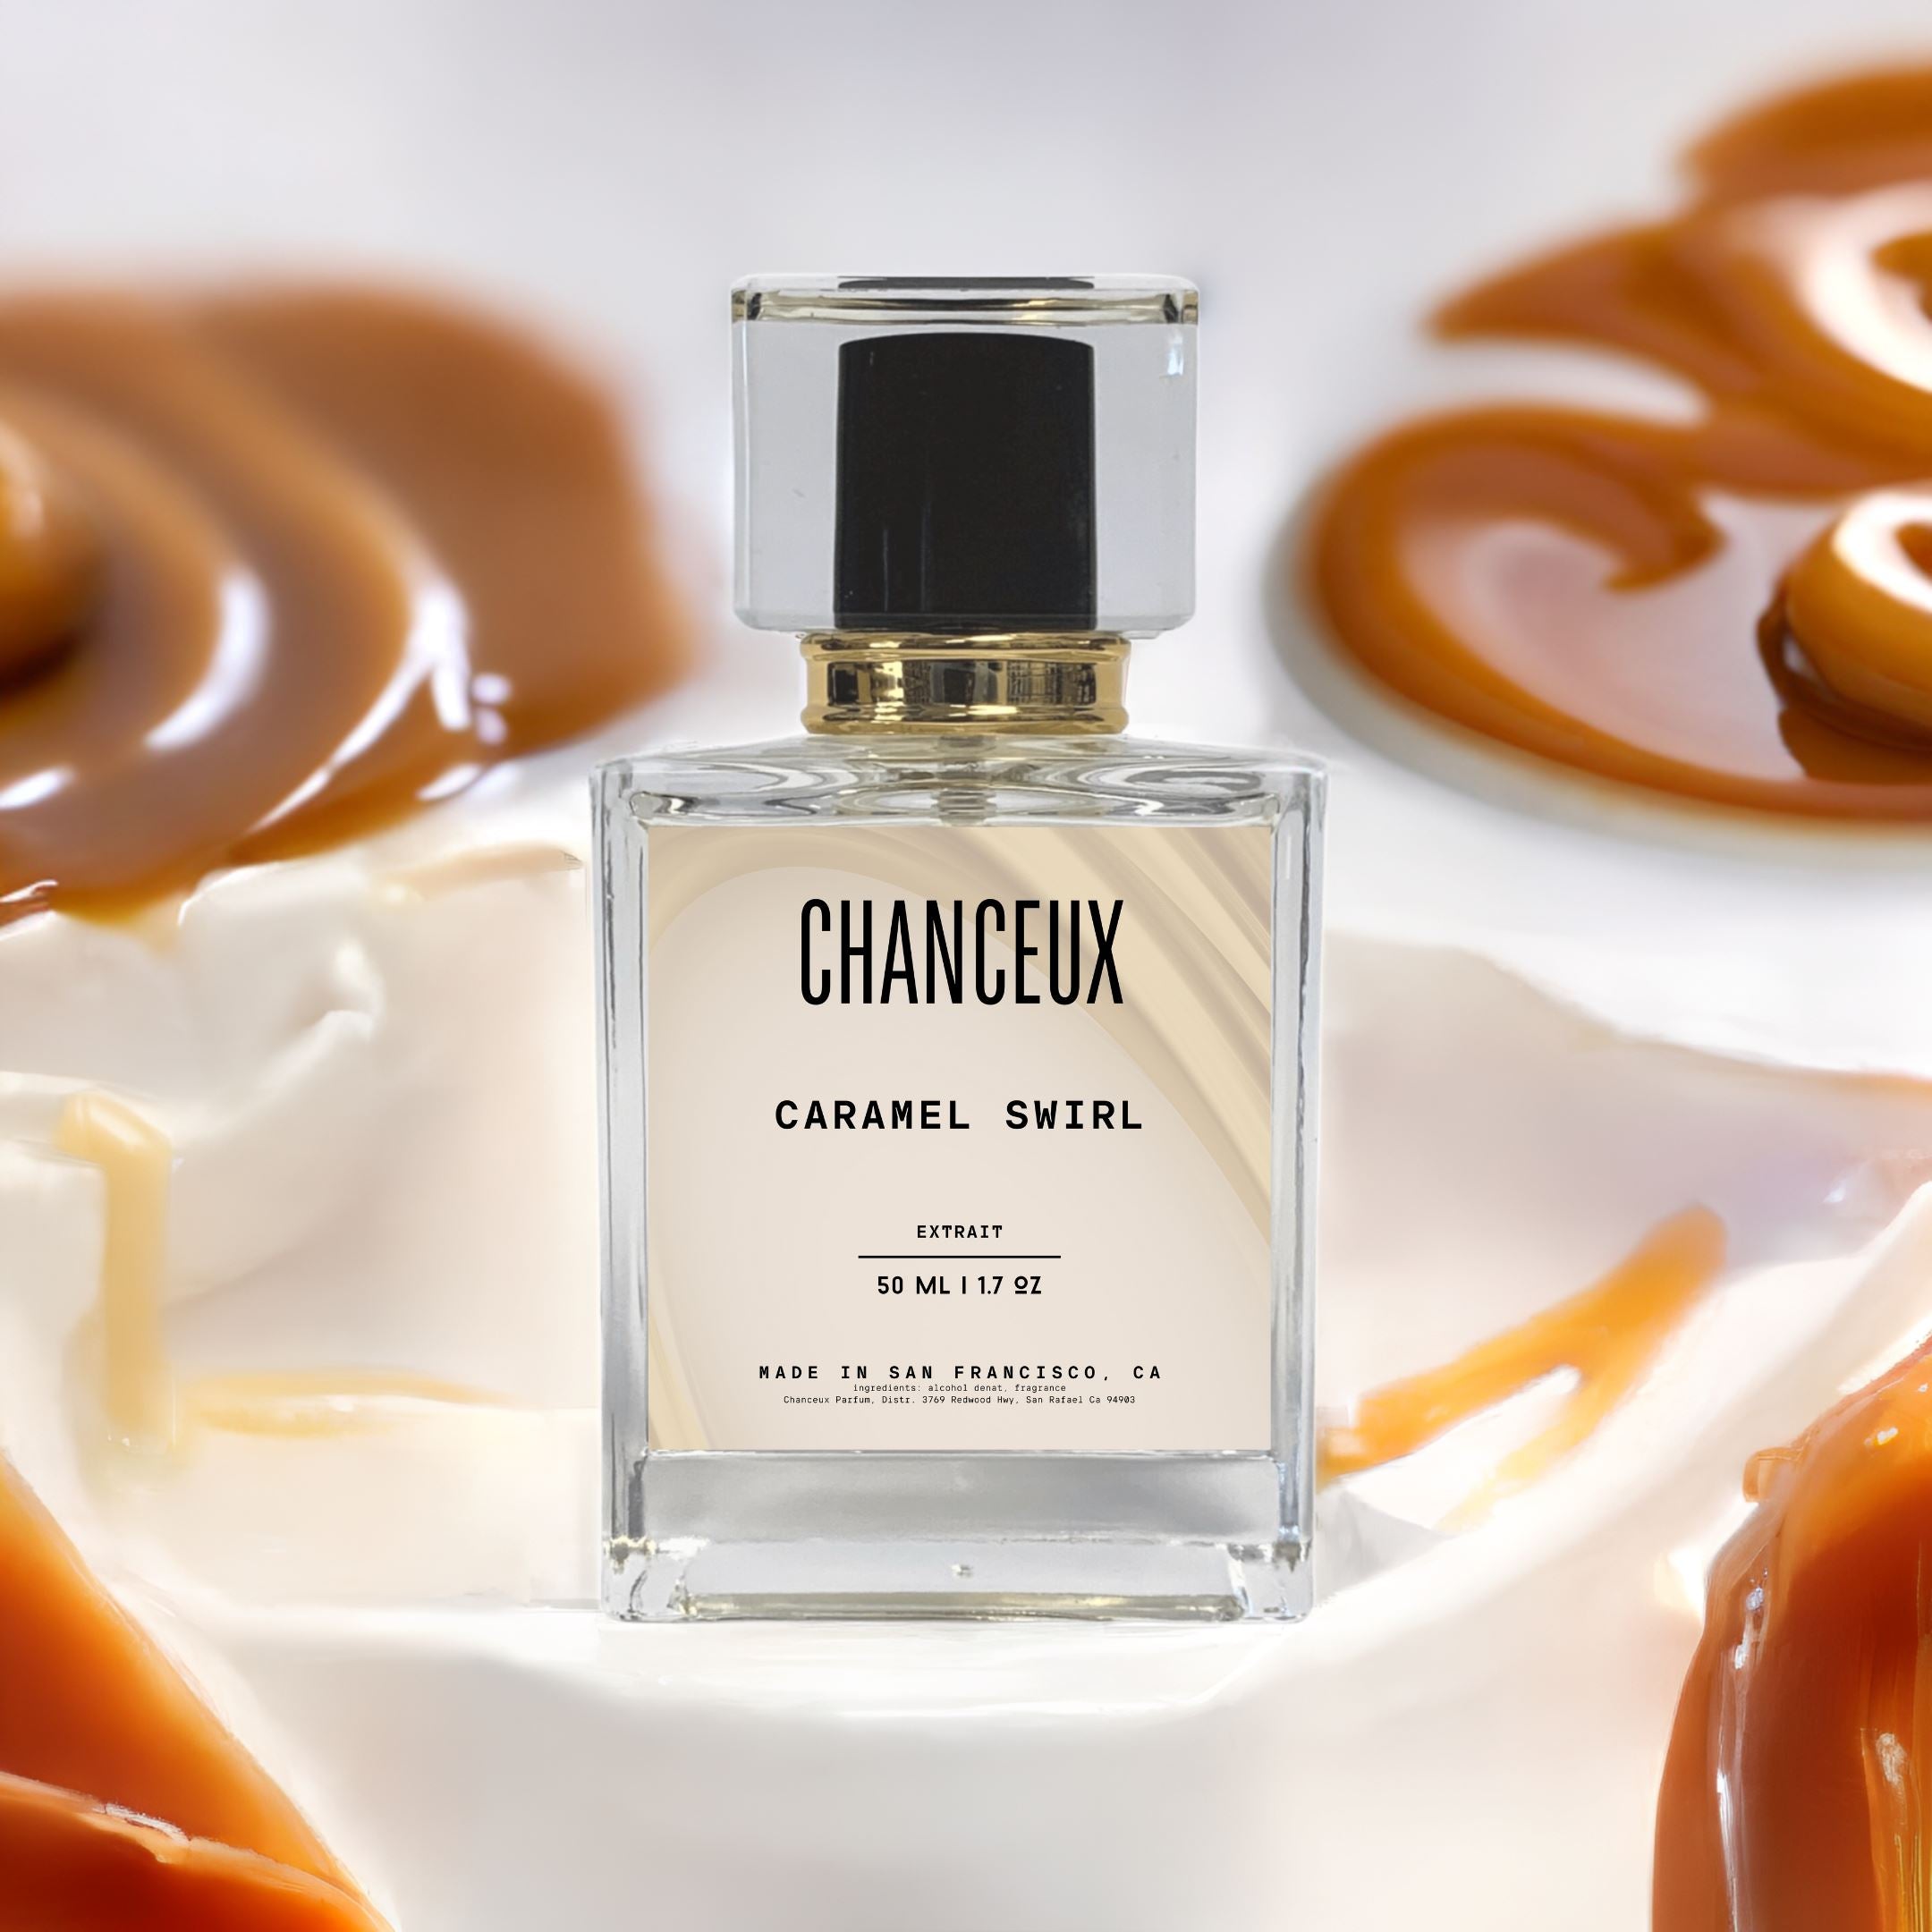 chanel chance perfume oil women